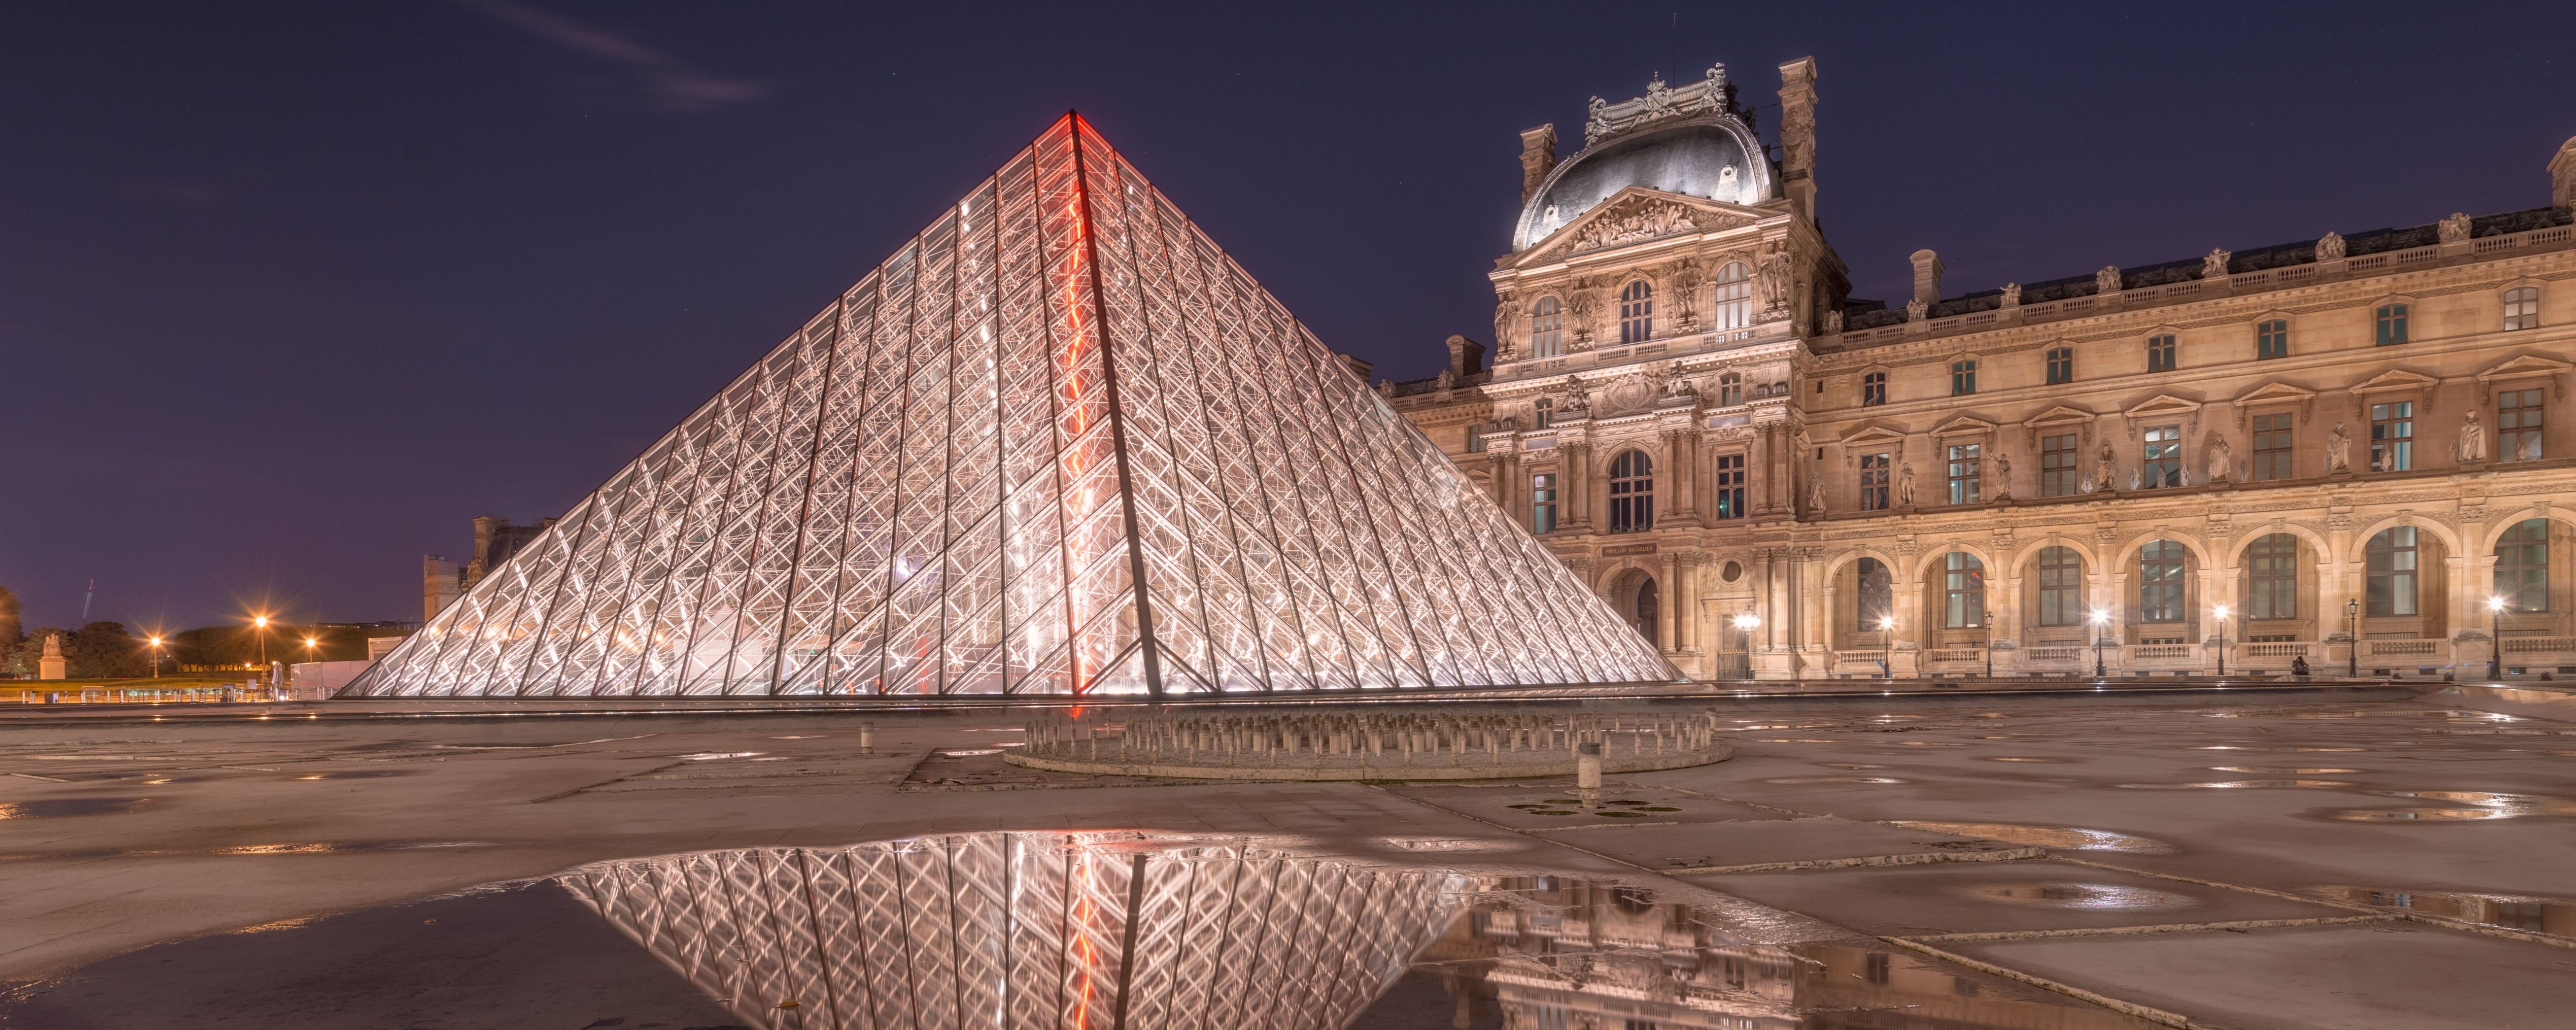 Pyramid at Louvre Museum, Paris, France скачать